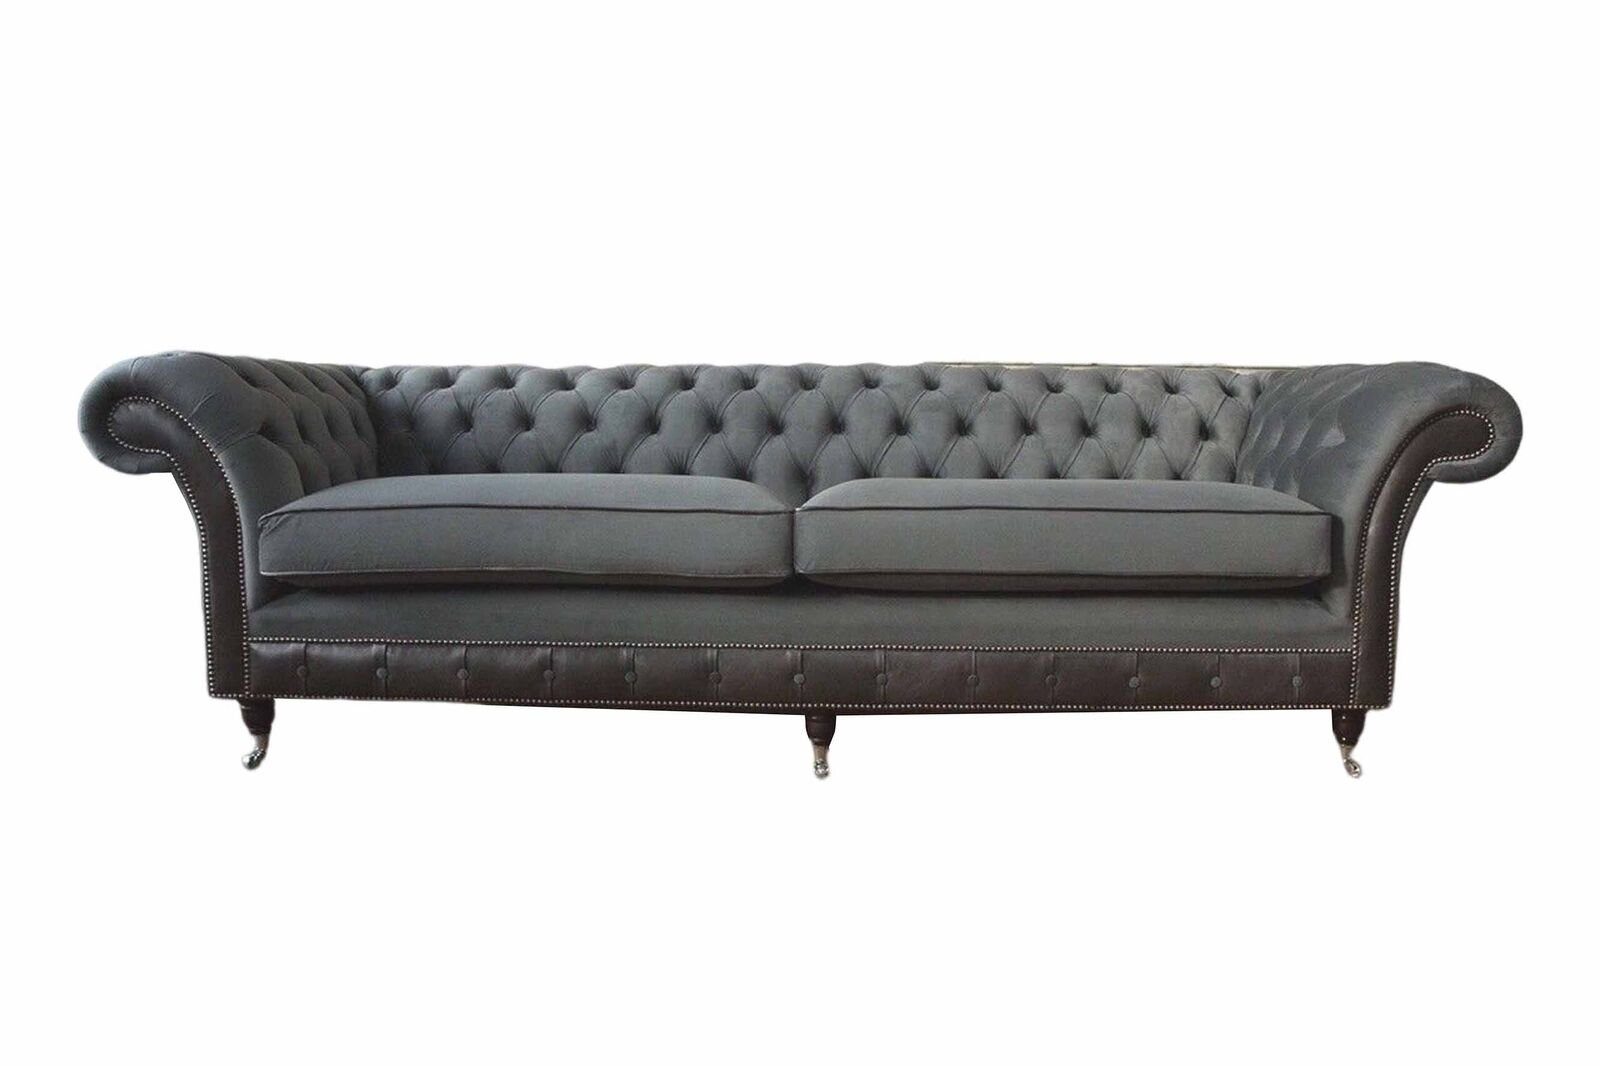 JVmoebel Sofa Design Couch Luxus Polstersofas Sofa 4 Sitzer Chesterfield Luxus Grau, Made in Europe